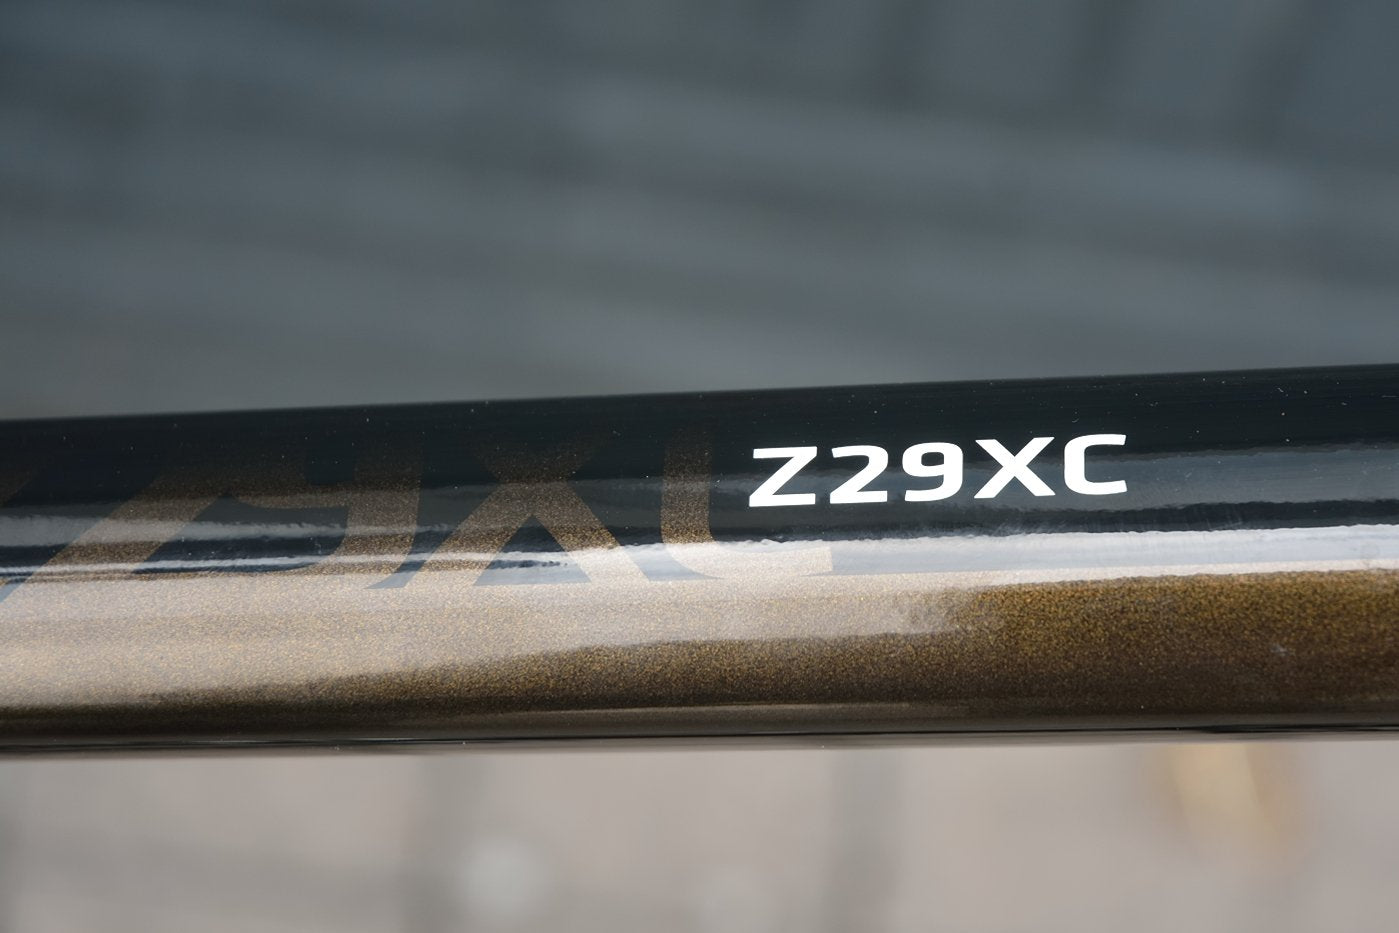 Zannata Z29XC XL